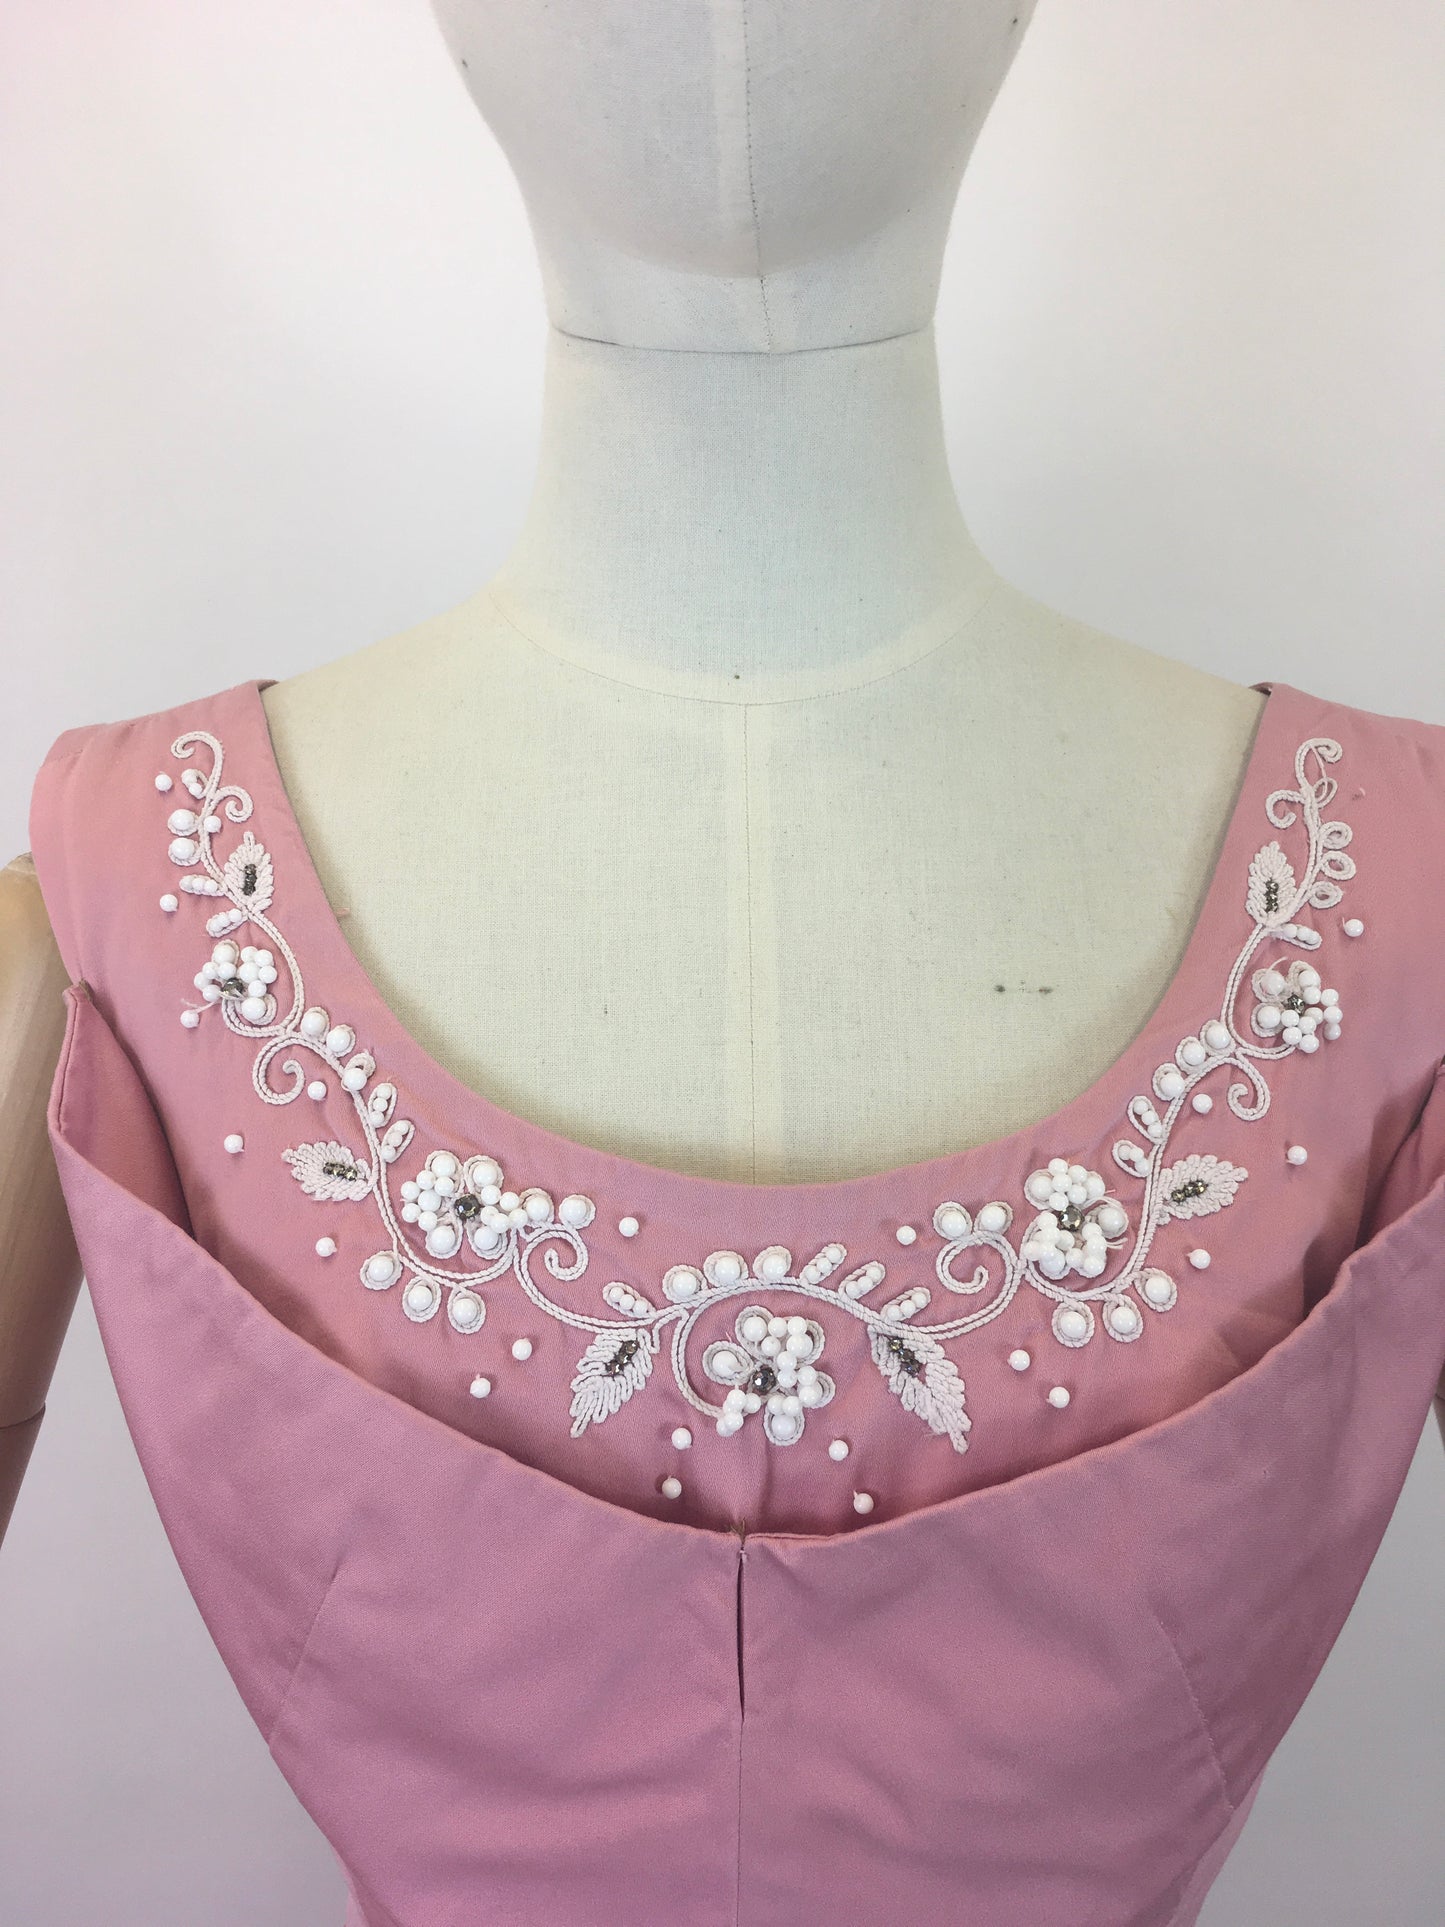 Original 1950's Sensational Dress with Beadwork Detailing - In a Delicate Rosebud Pink